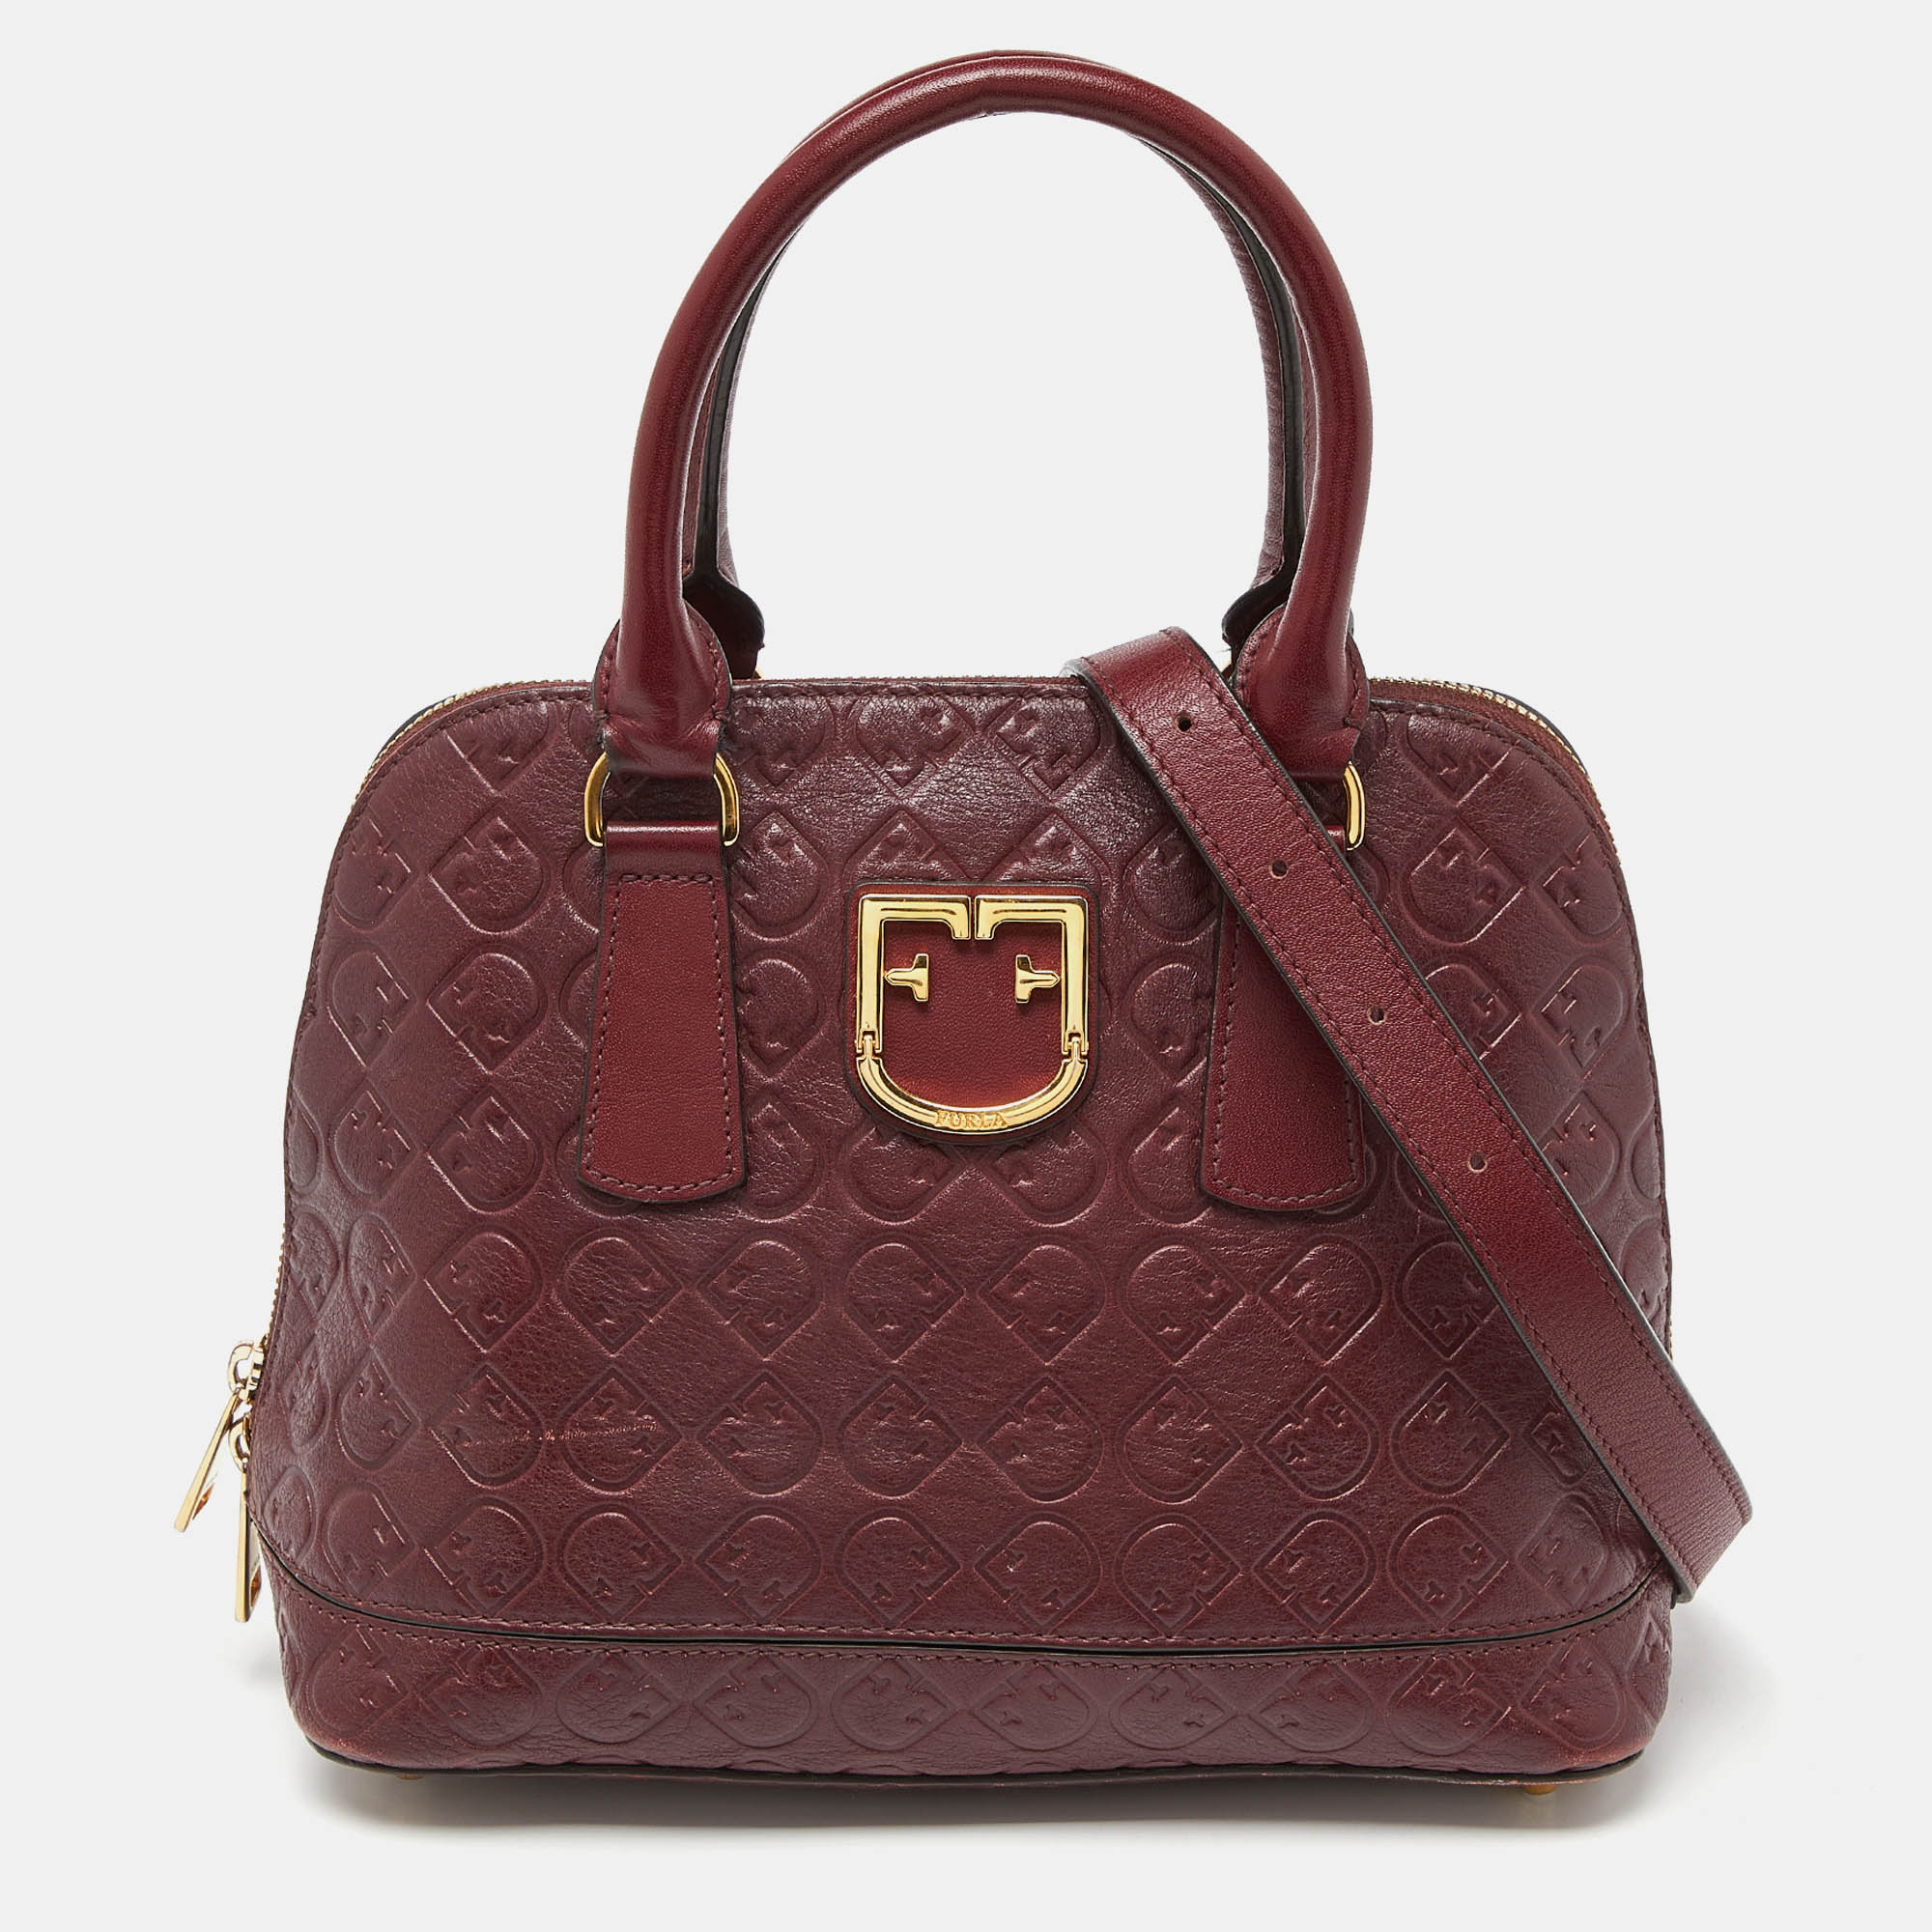 Furla burgundy leather dome satchel